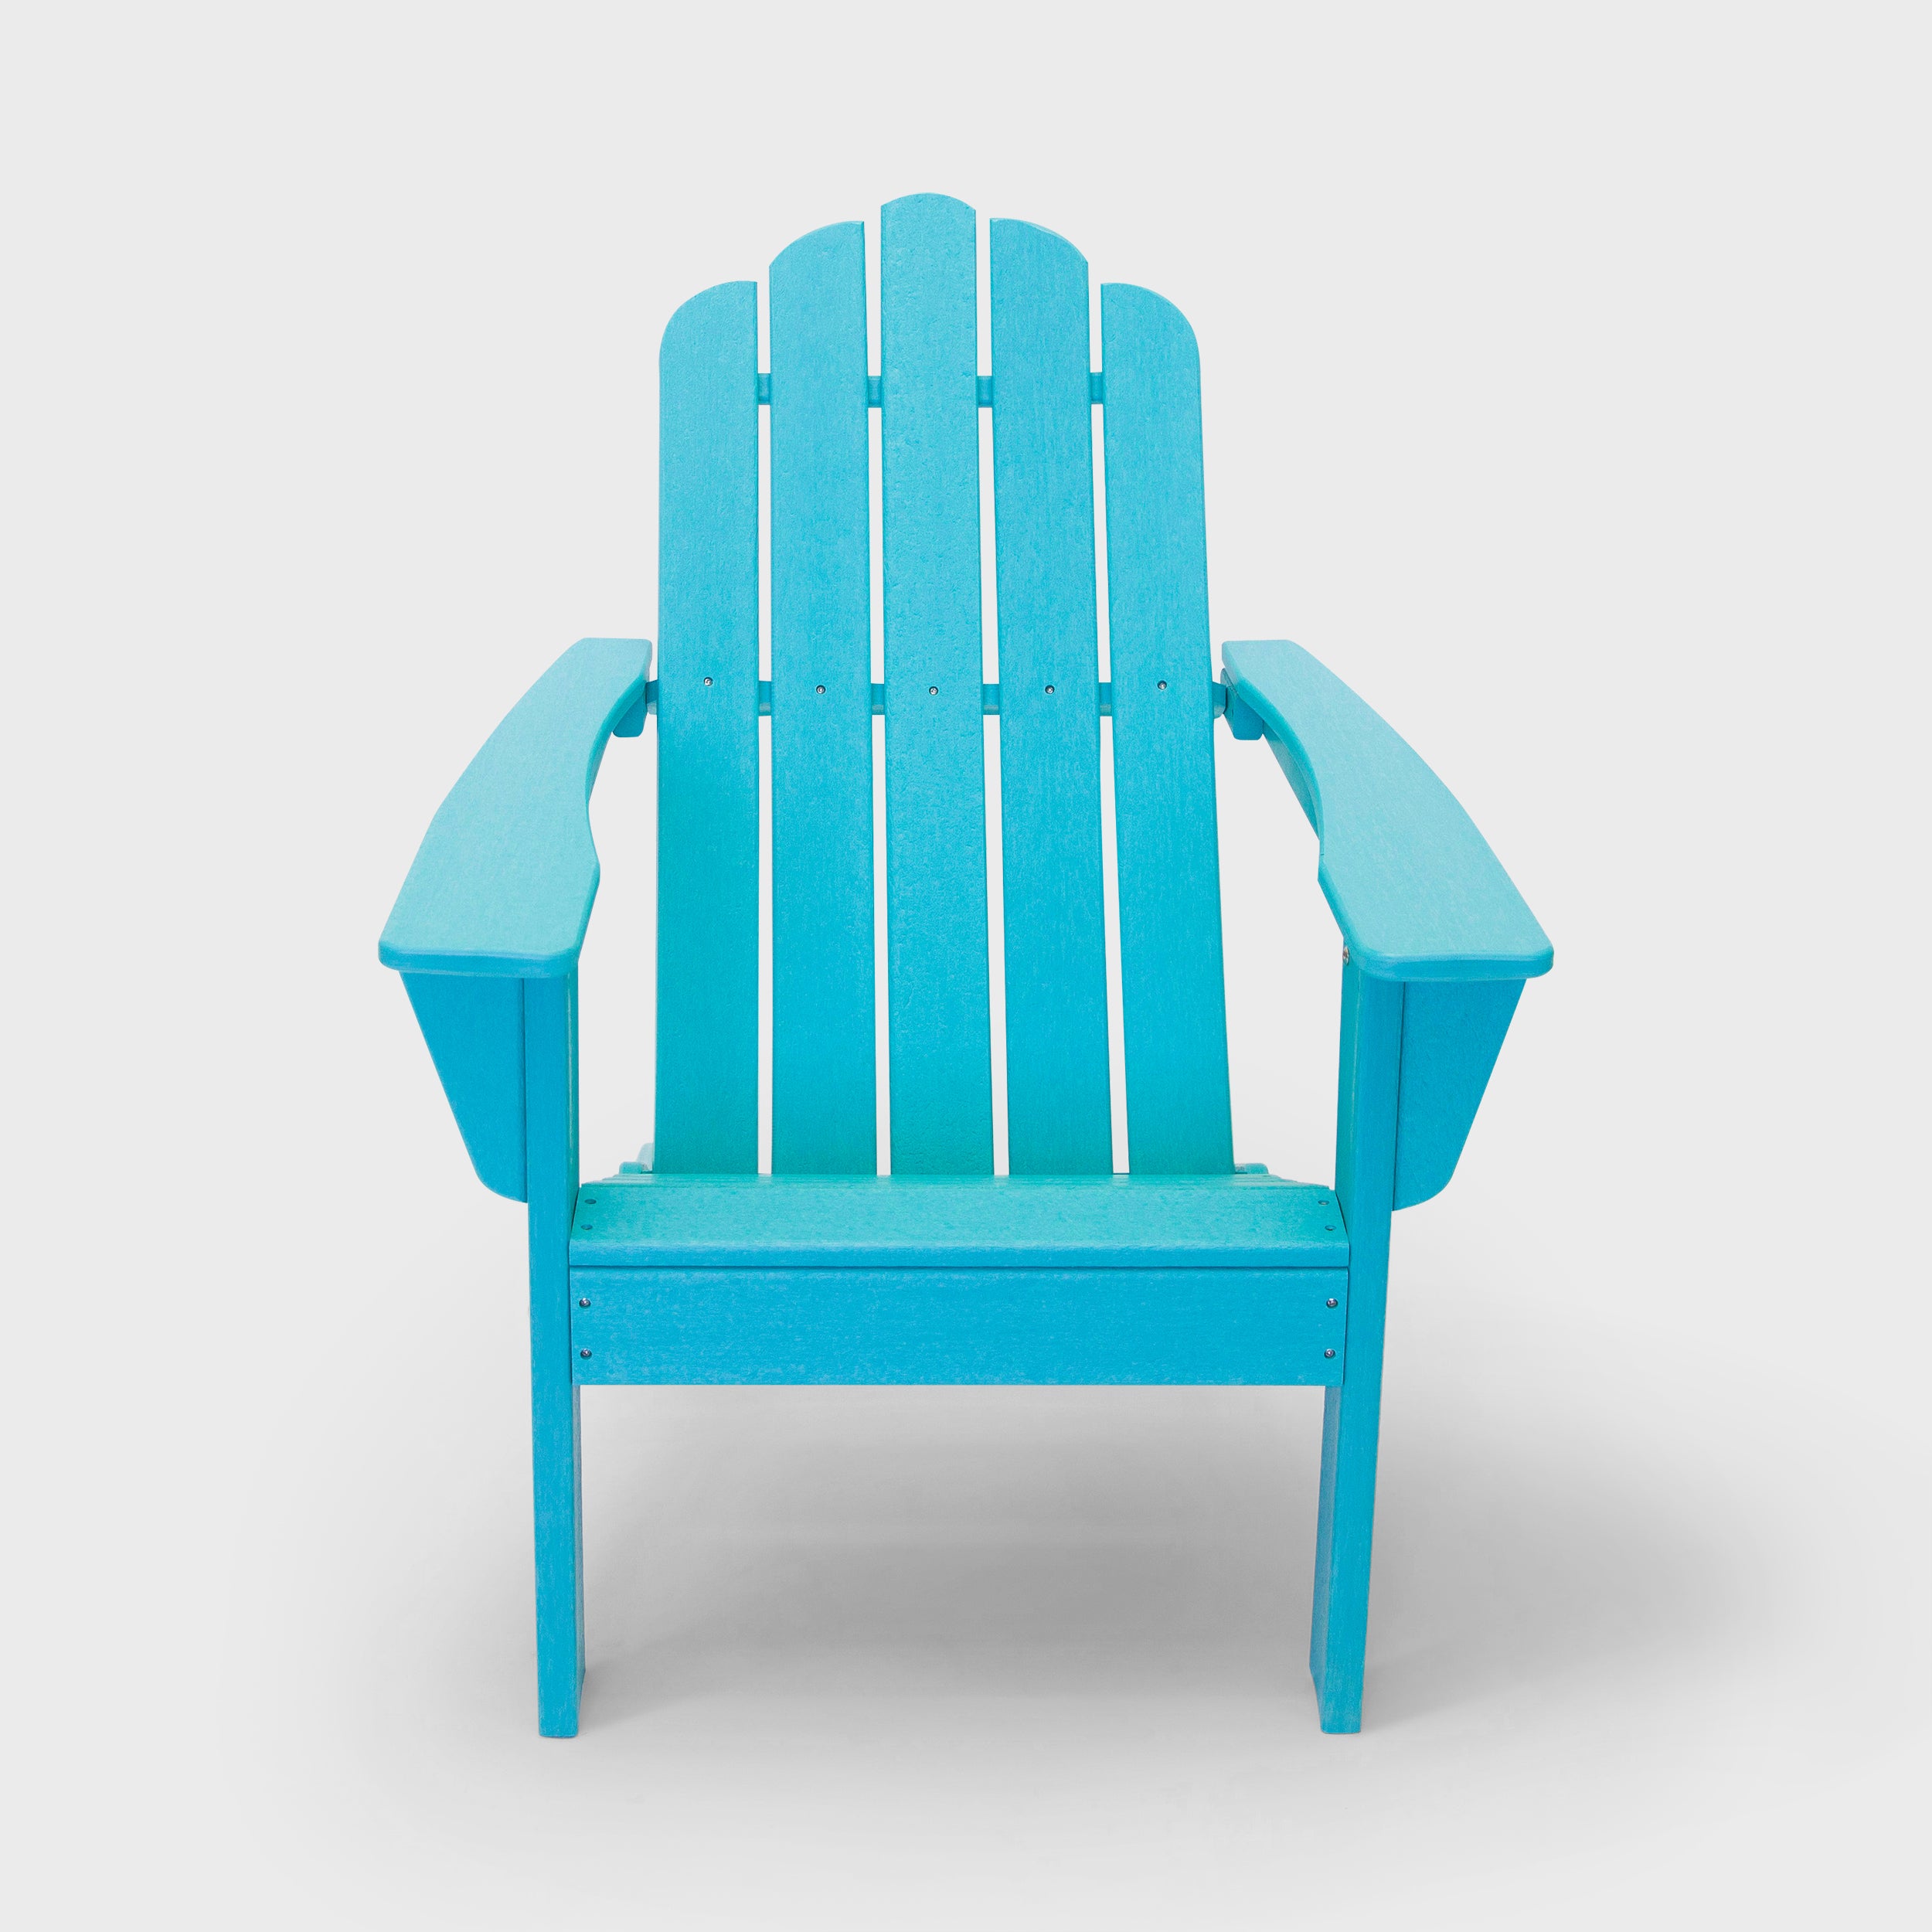 Marina HDPE Outdoor Adirondack Chair